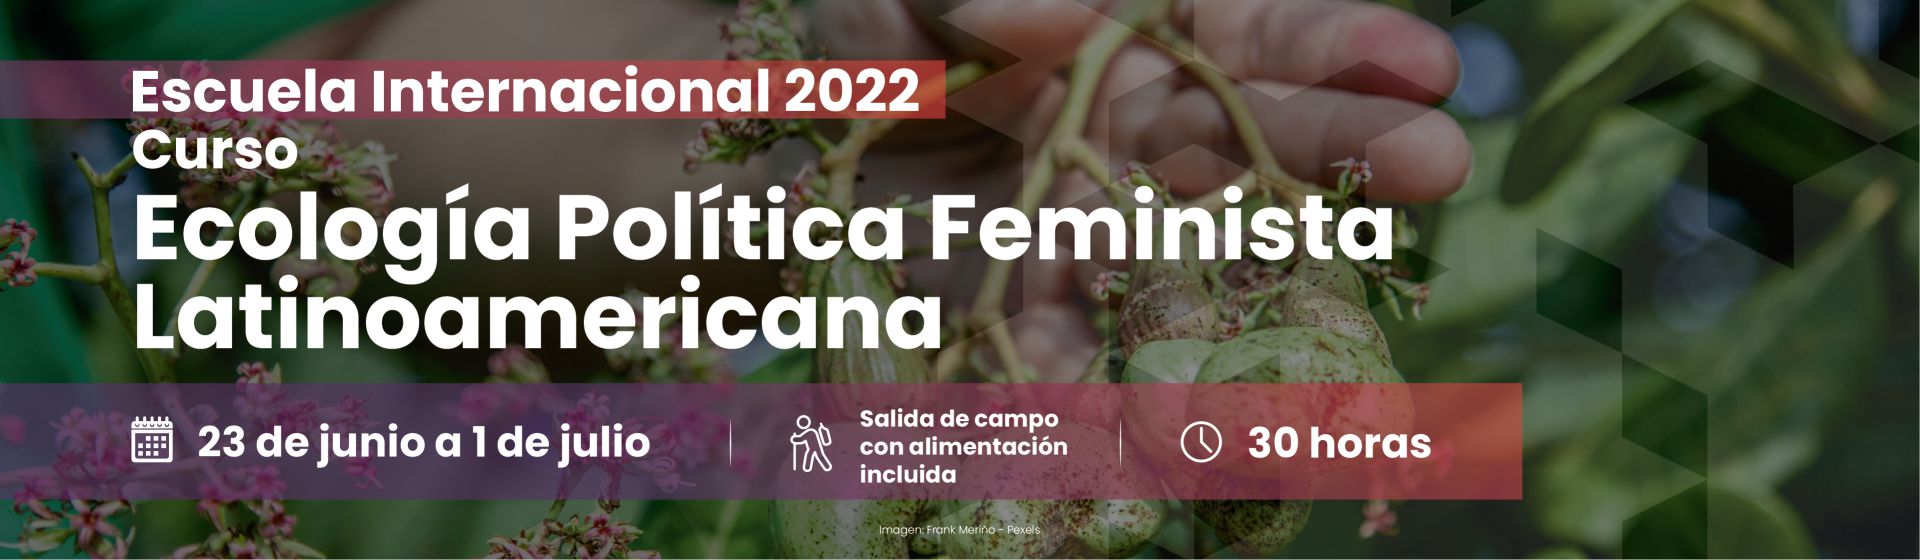 Curso Internacional de Verano: Ecología Política Feminista Latinoamericana 